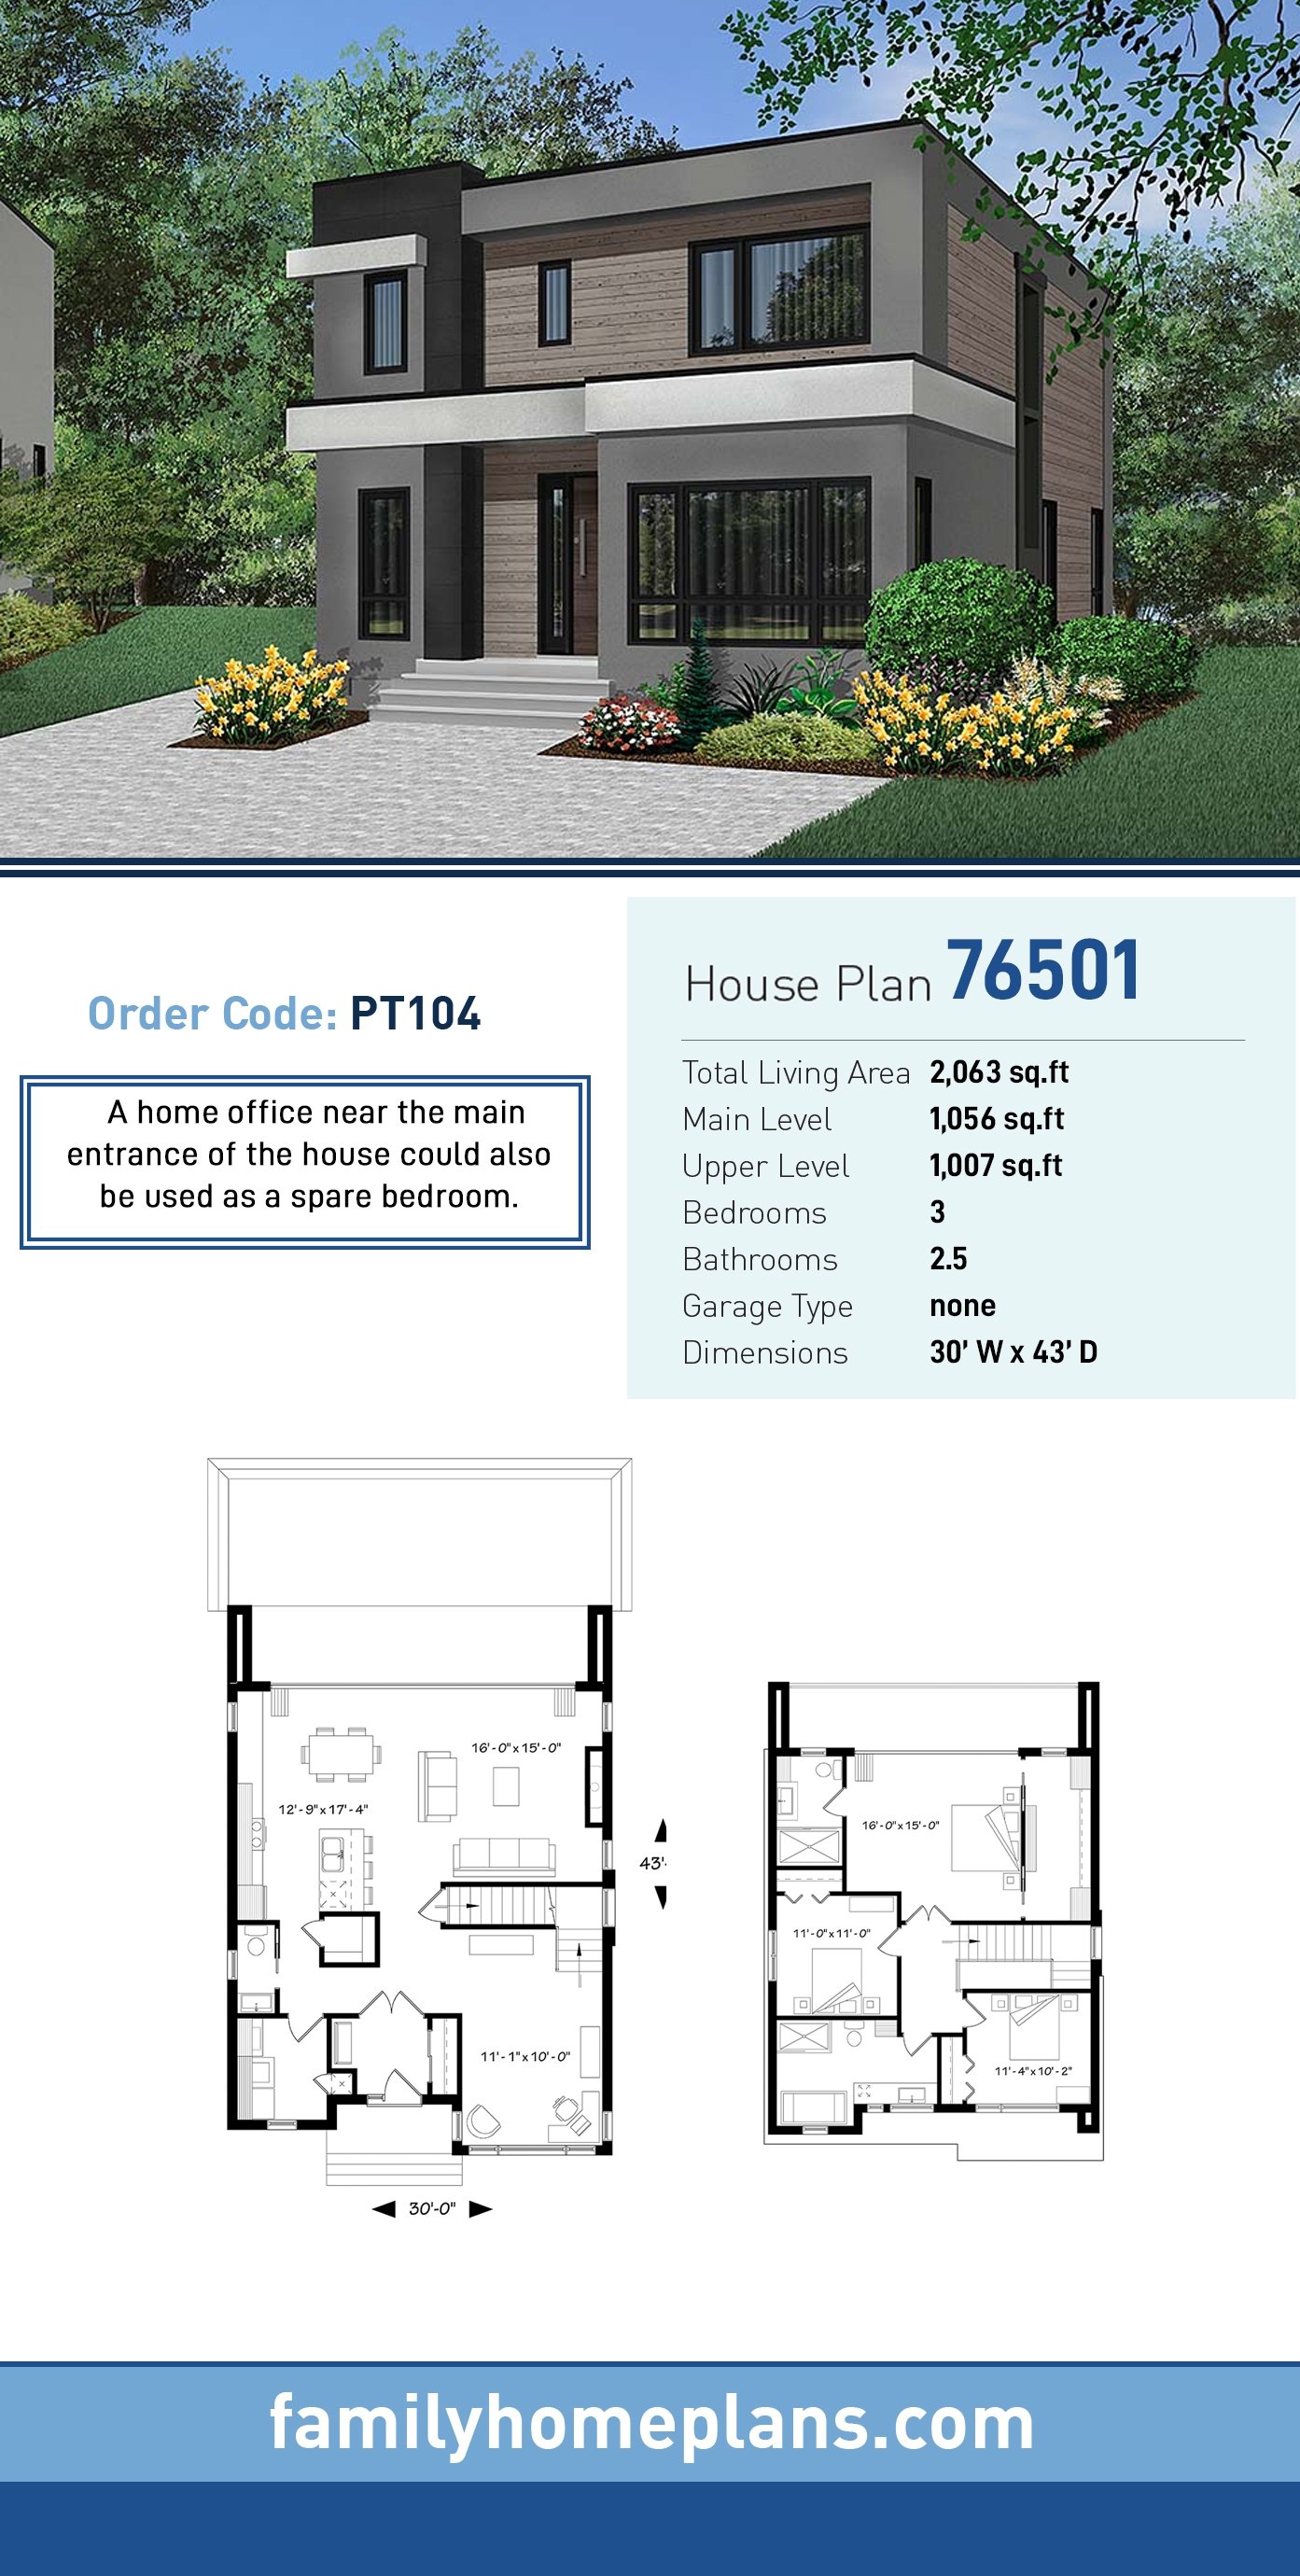 House Plan 76501